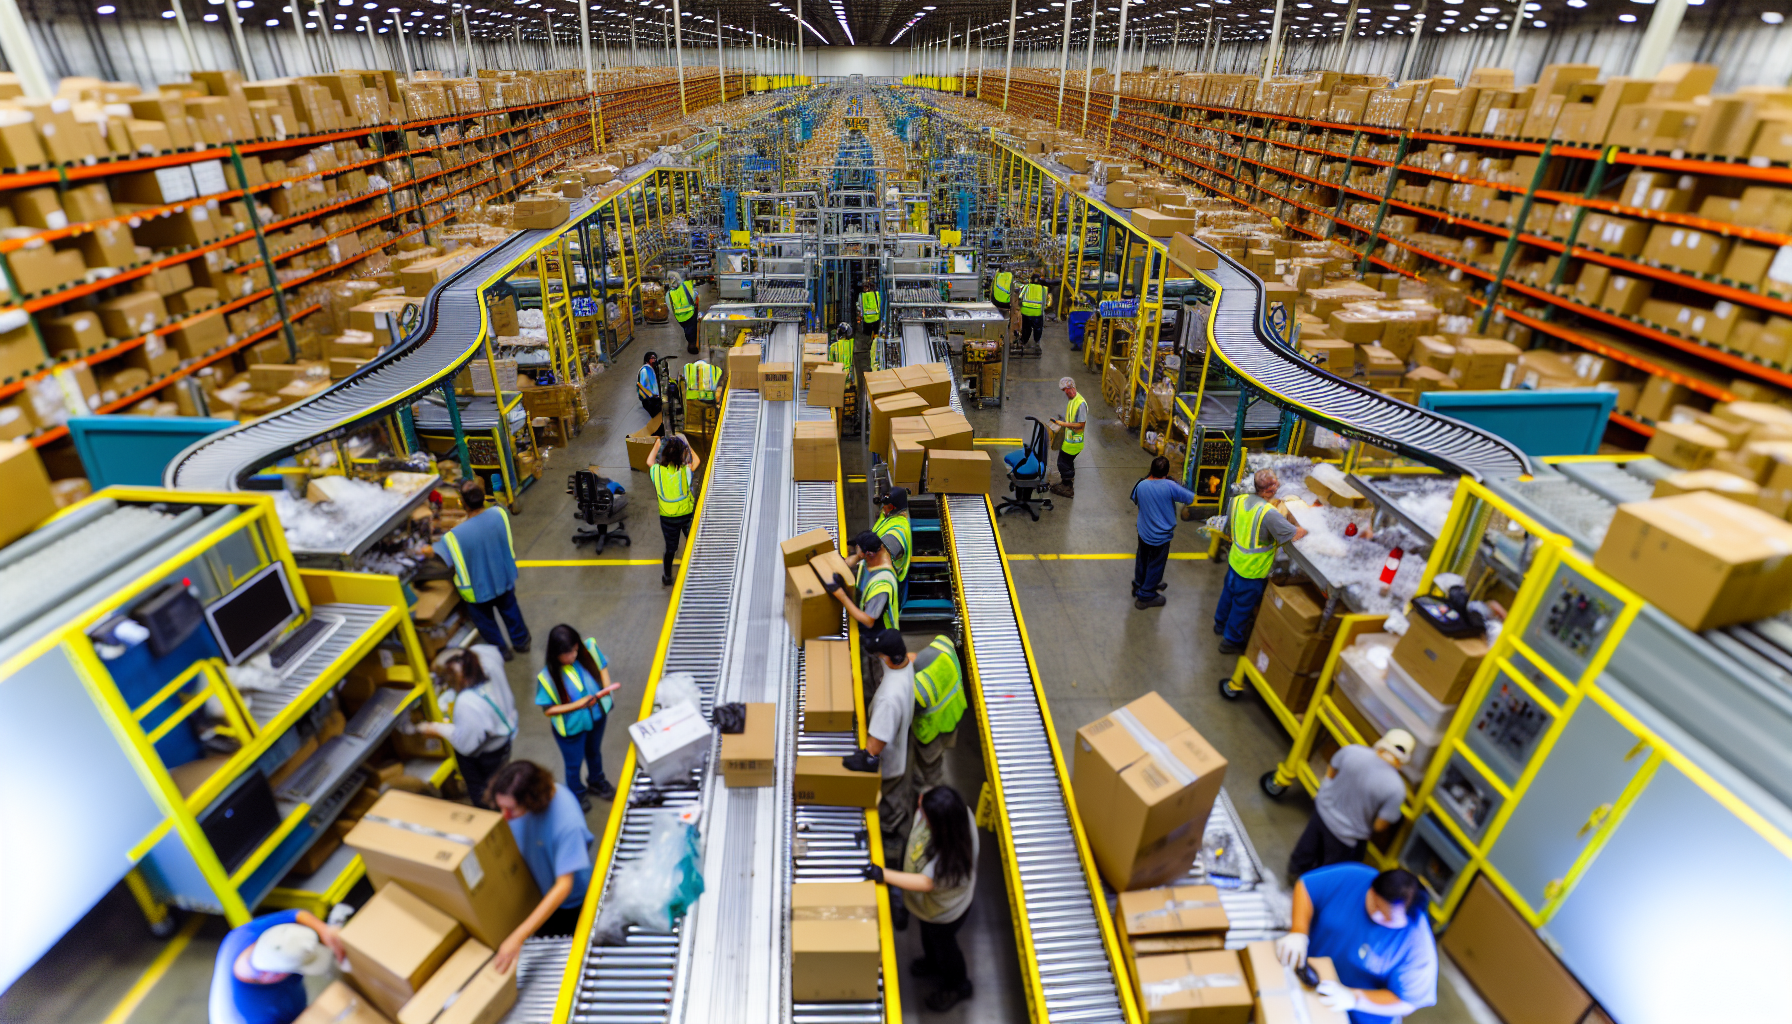 Amazon's dominance in e-commerce